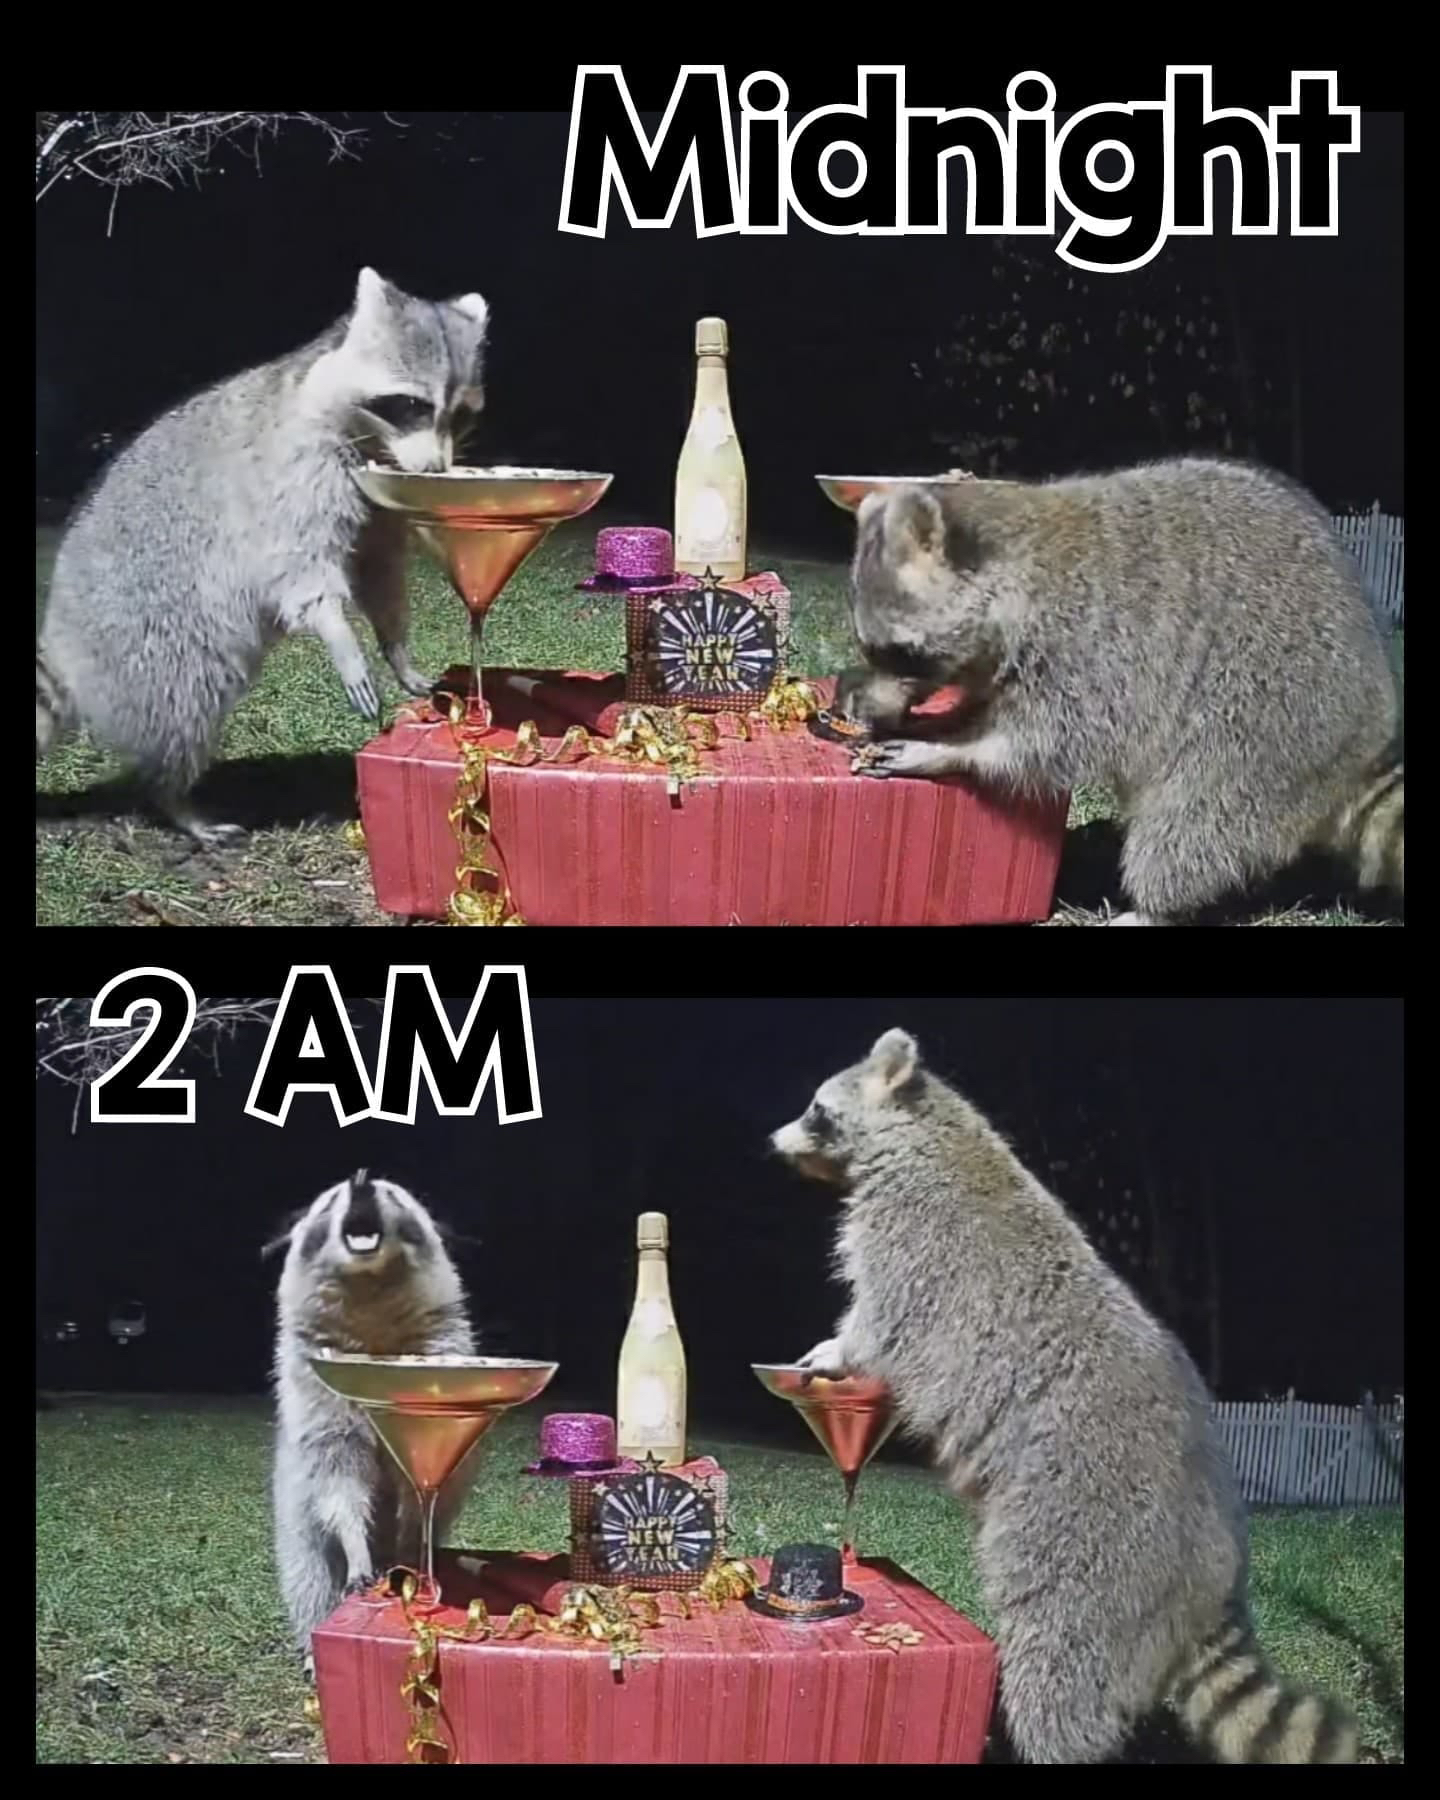 Two raccoons enjoying themselves in Ashburn woman's backyard